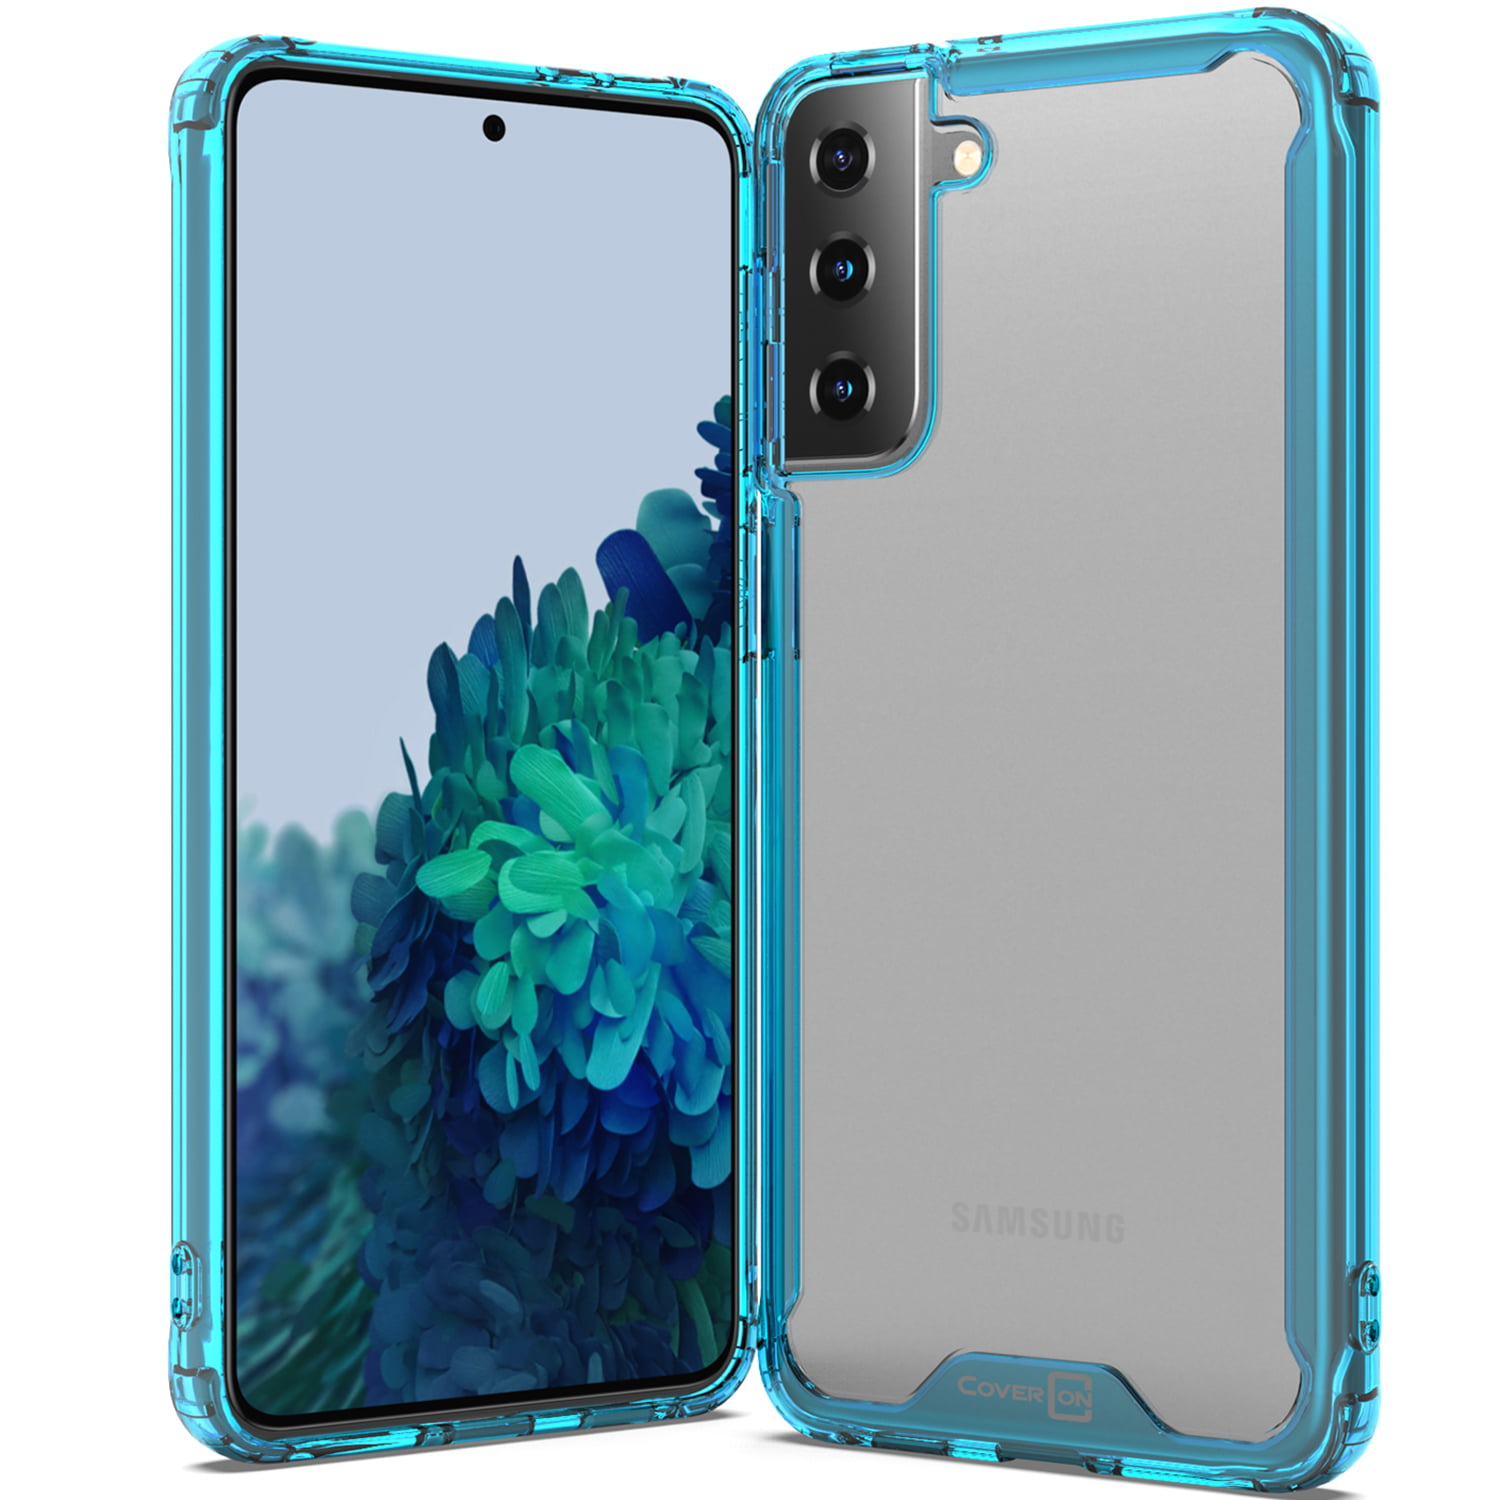 Coveron For Samsung Galaxy S21 5g Case Clear Slim Fit Lightweight Hard Phone Cover Tpu Blue Bumper Walmart Com Walmart Com